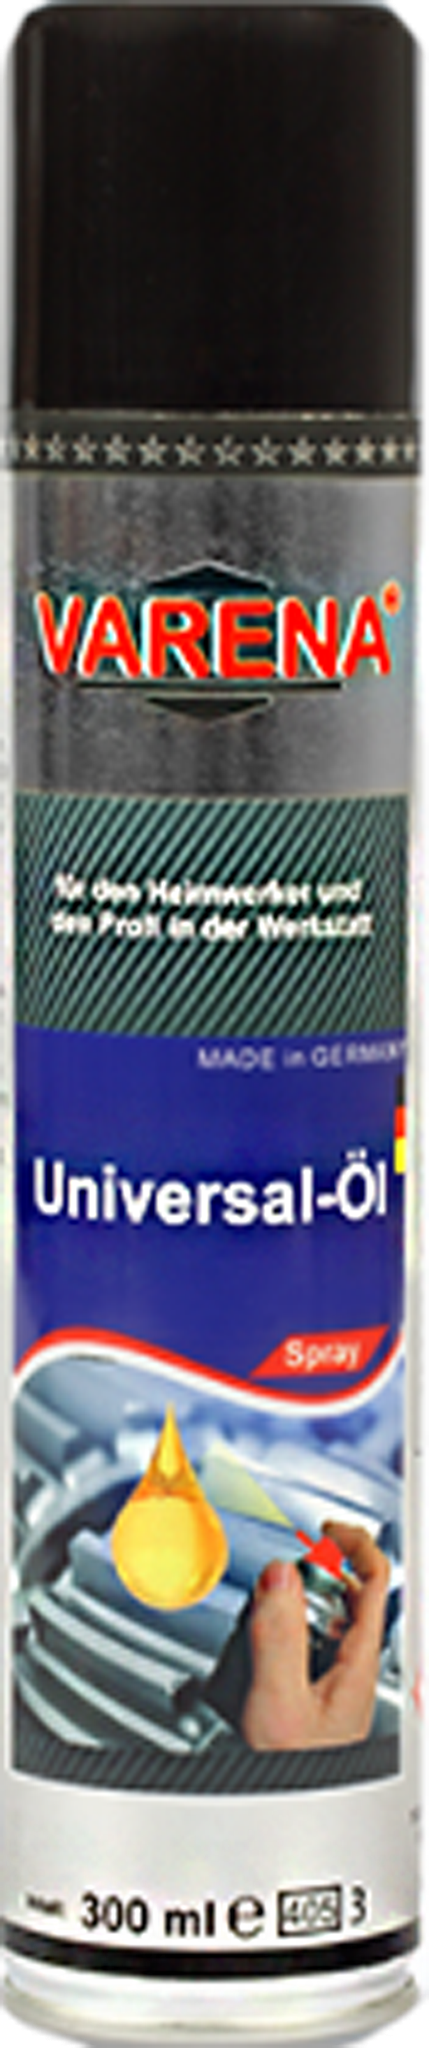 Picture of Universal-Öl-Spray